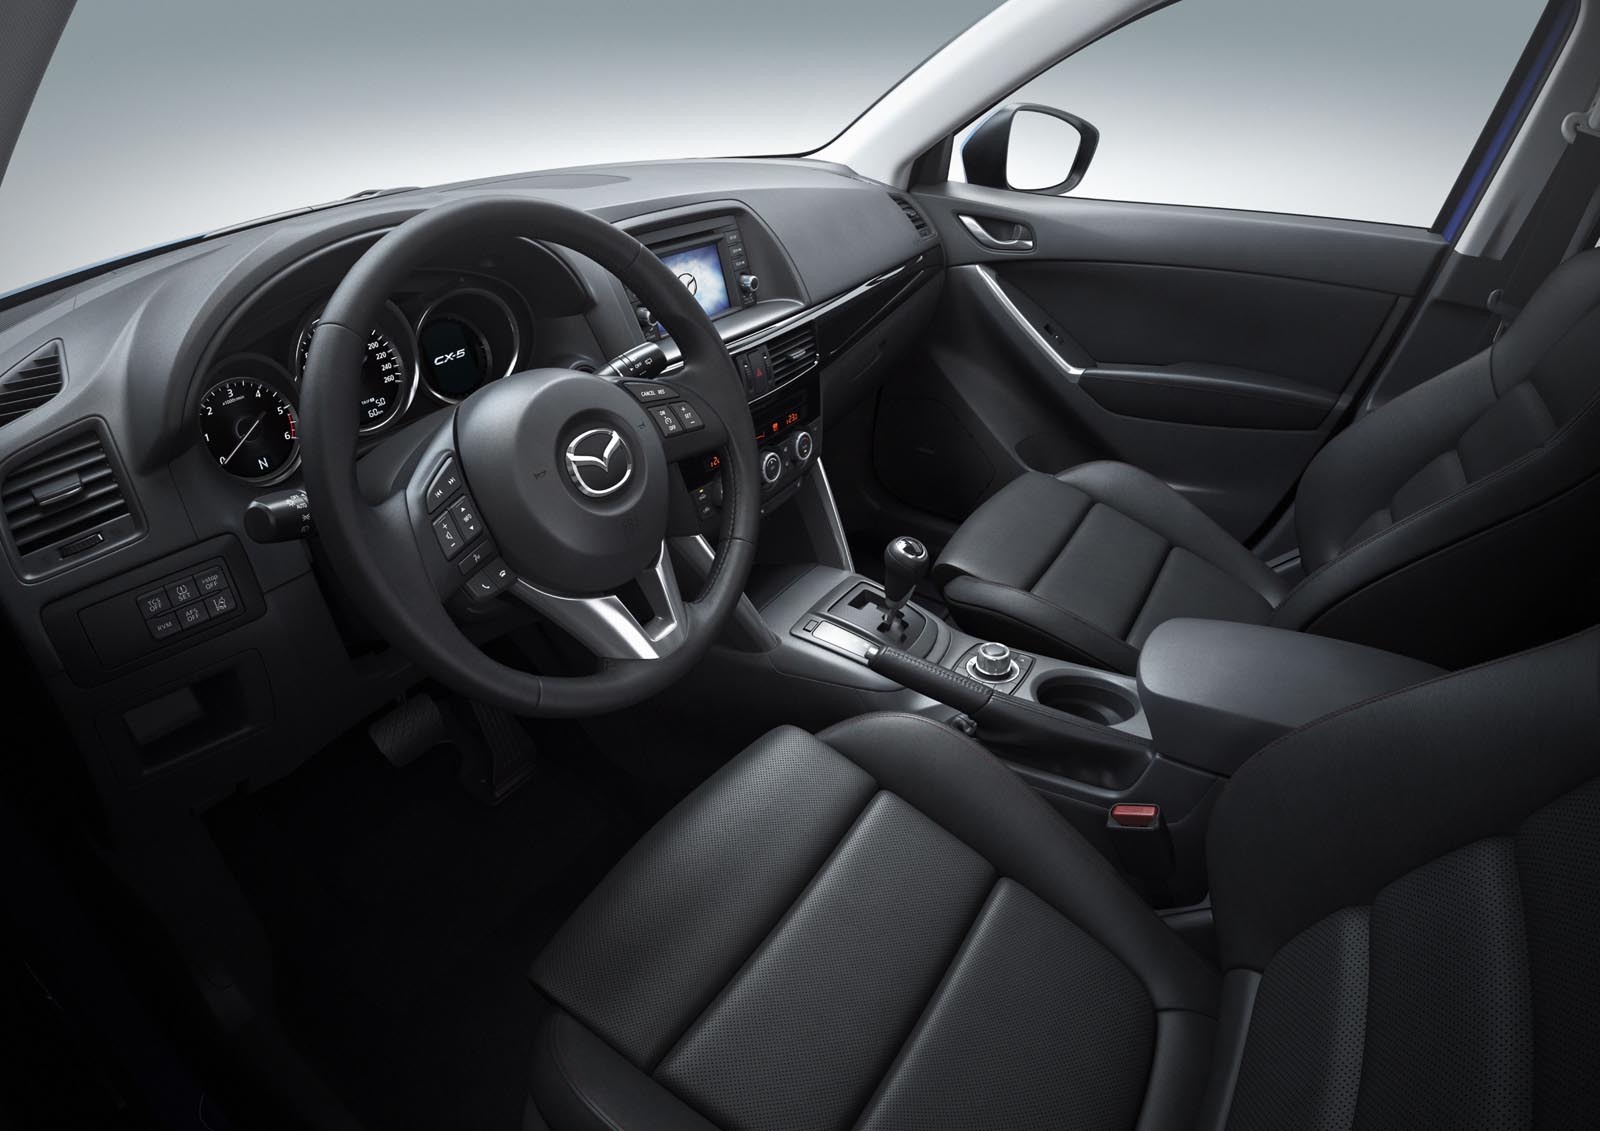 Interiorul lui Mazda CX-5 pune accentul pe sportivitate si calitate